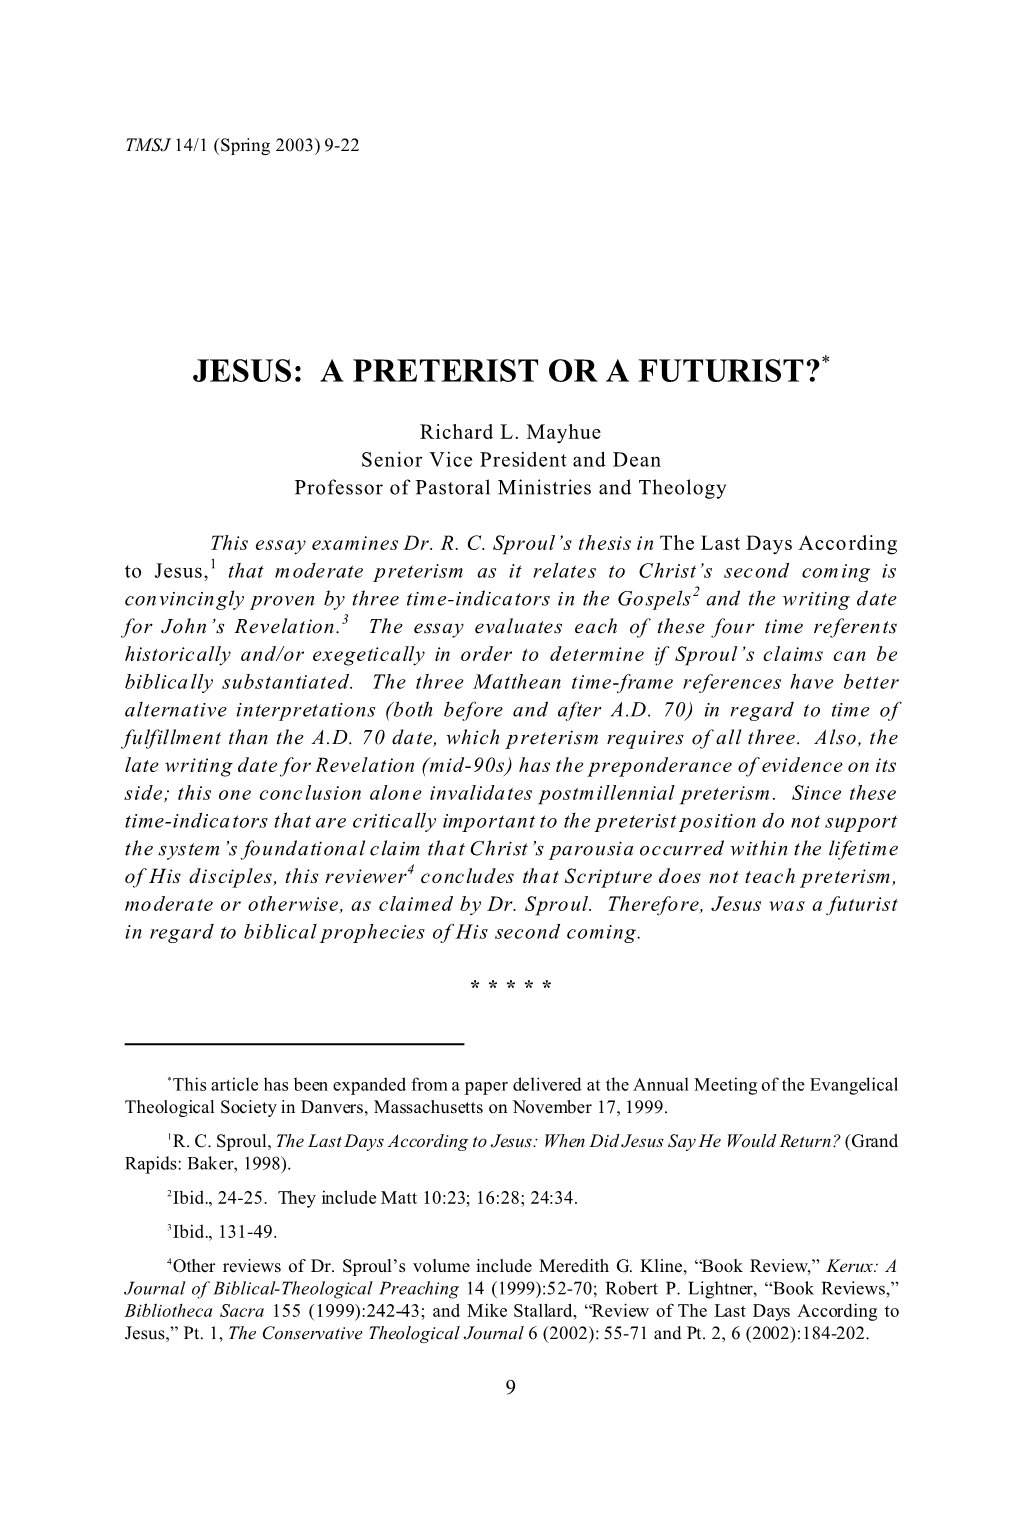 Jesus: a Preterist Or a Futurist?*